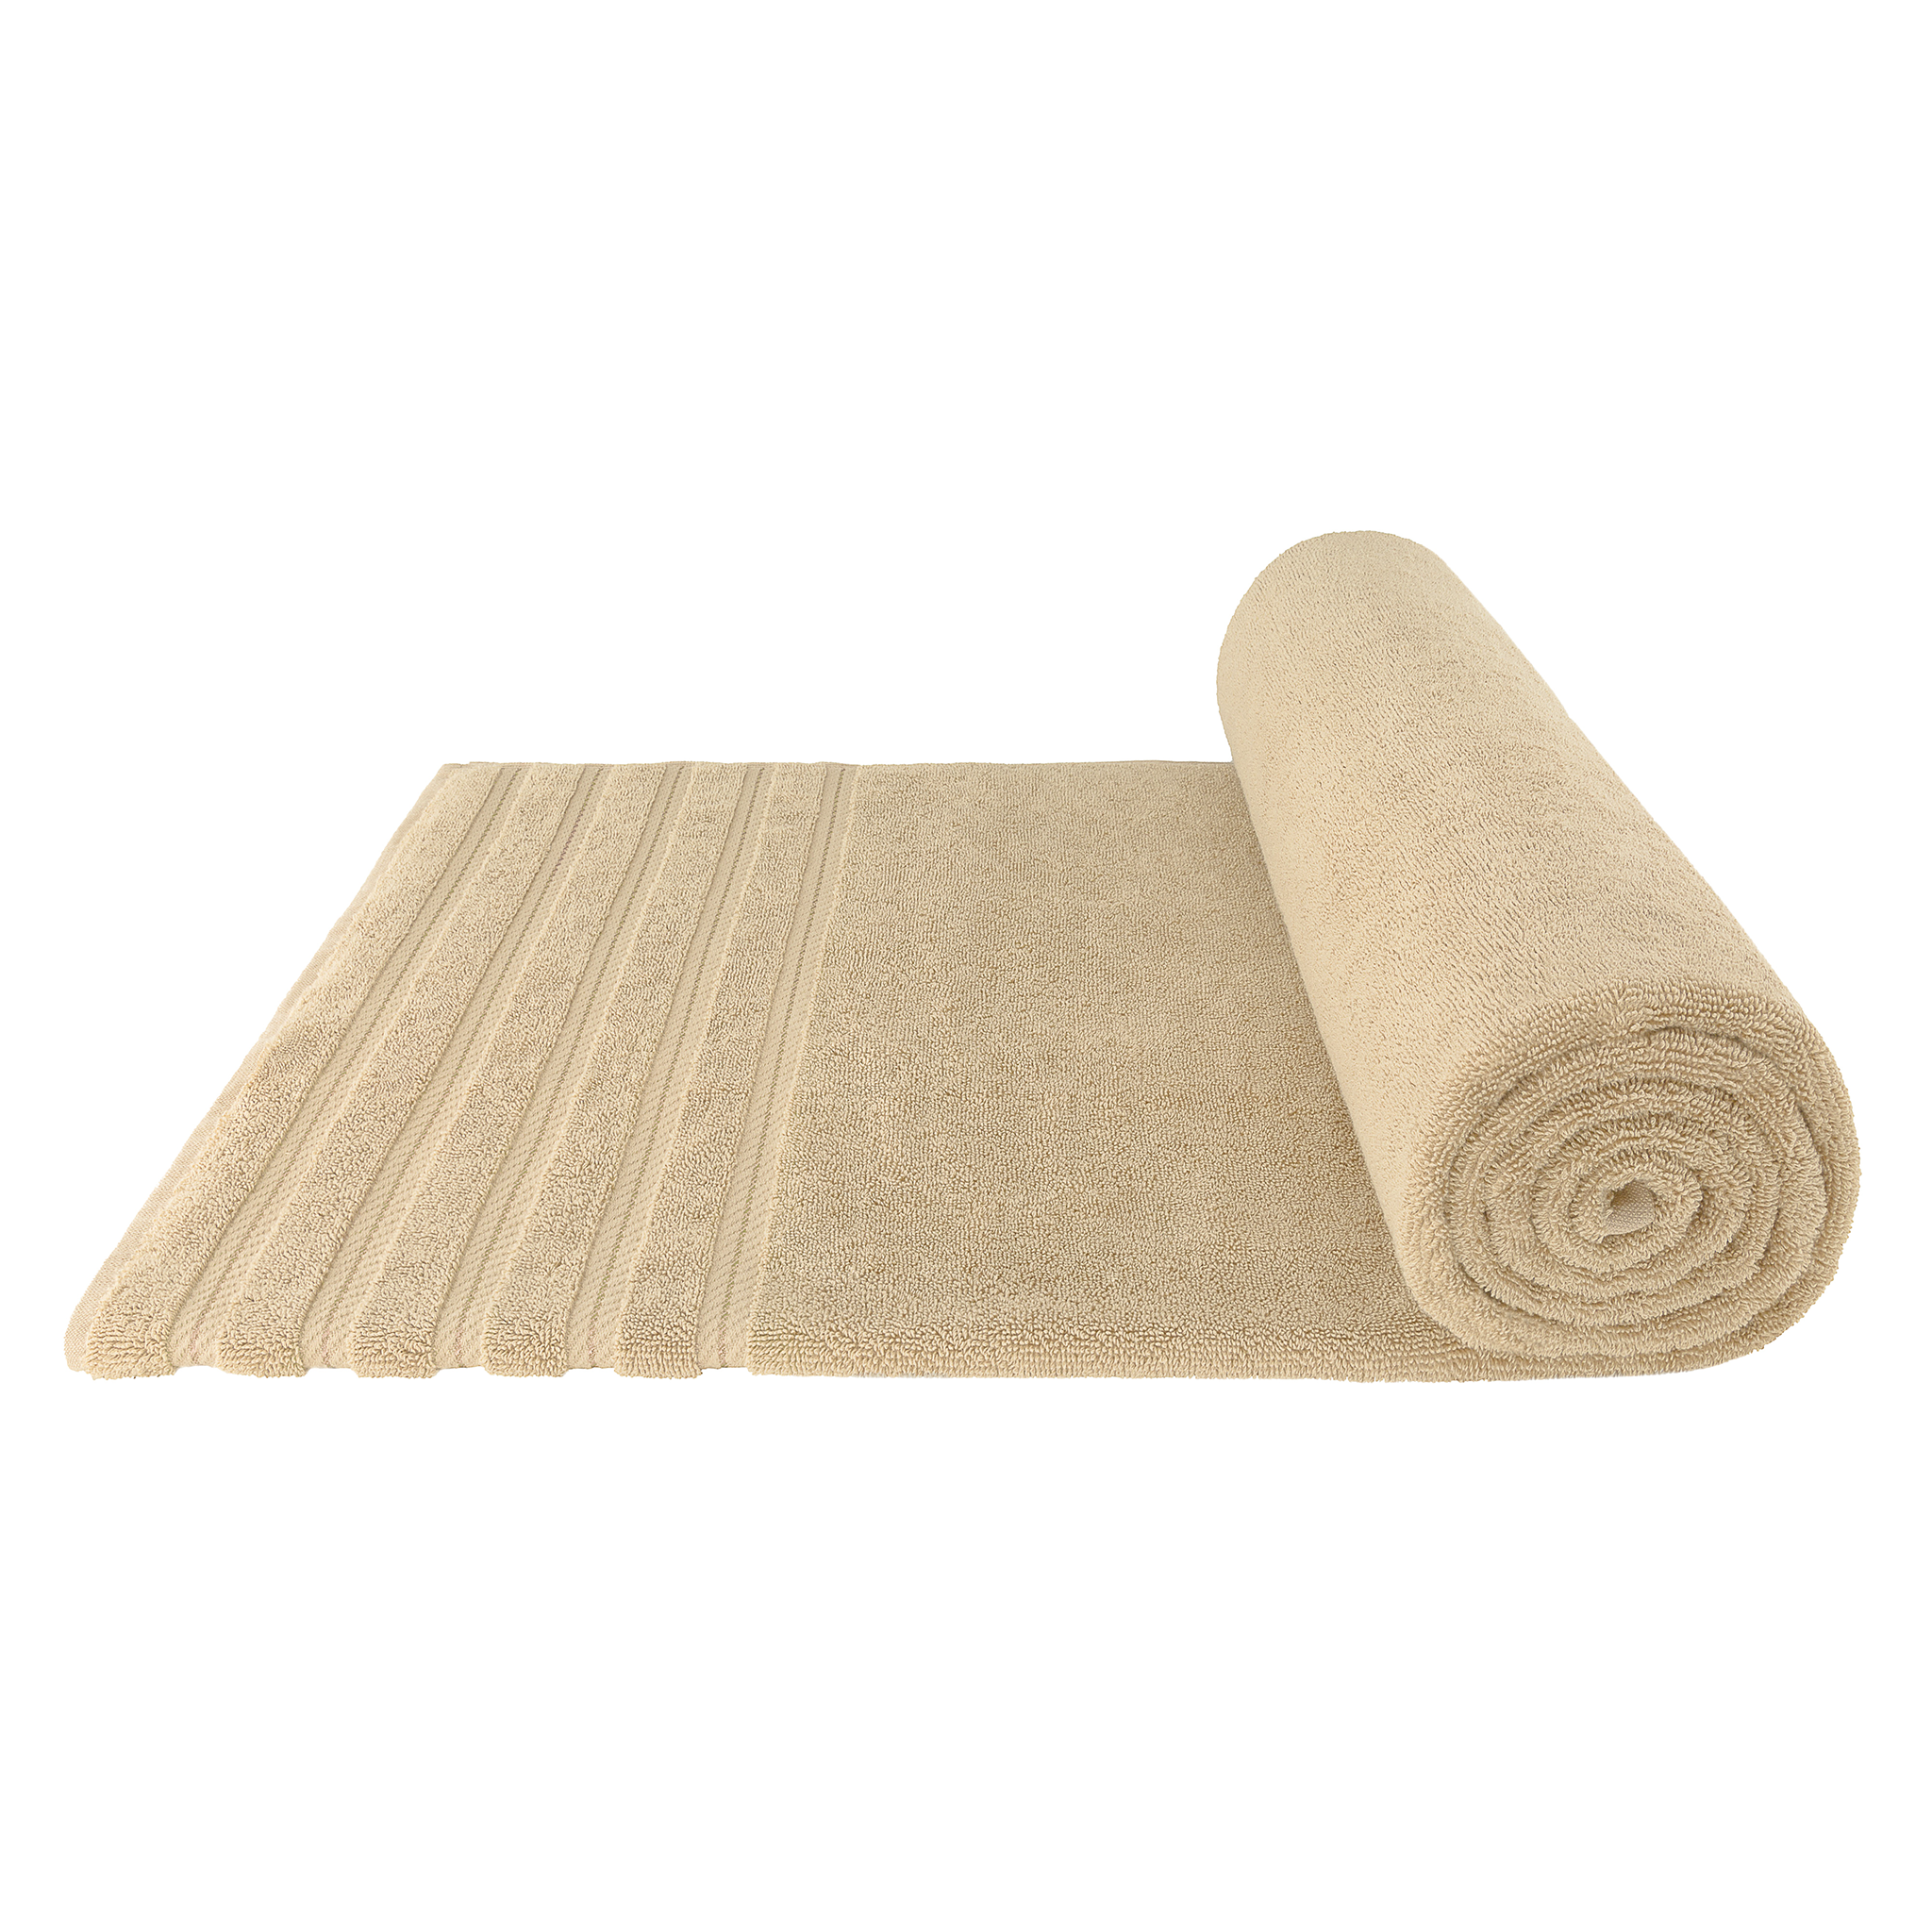 American Soft Linen - 35x70 Jumbo Bath Sheet Turkish Bath Towel - 16 Piece Case Pack - Sand-Taupe - 6